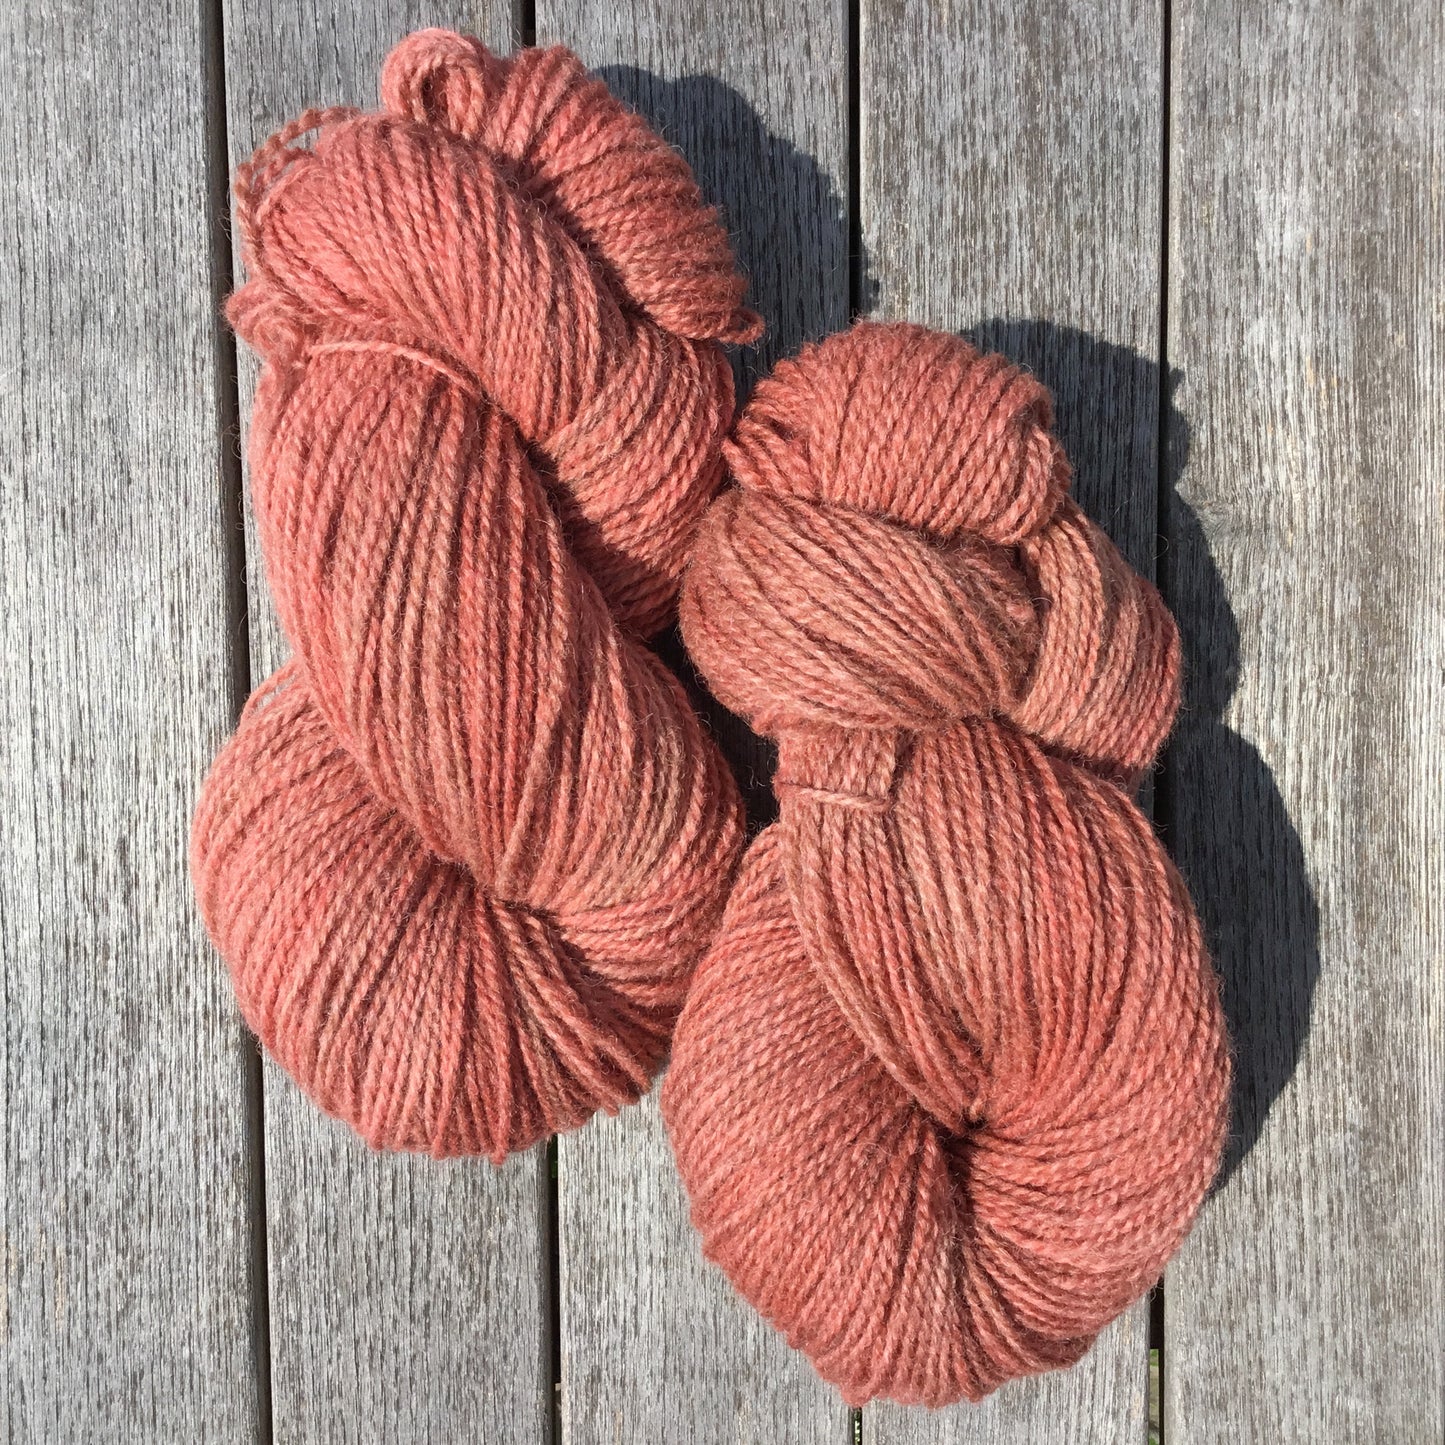 Brazilwood Plant-Dyed Yarn - Worsted Wool Yarn (40 Merino 60 Romney) 2 ply - 4 oz skeins